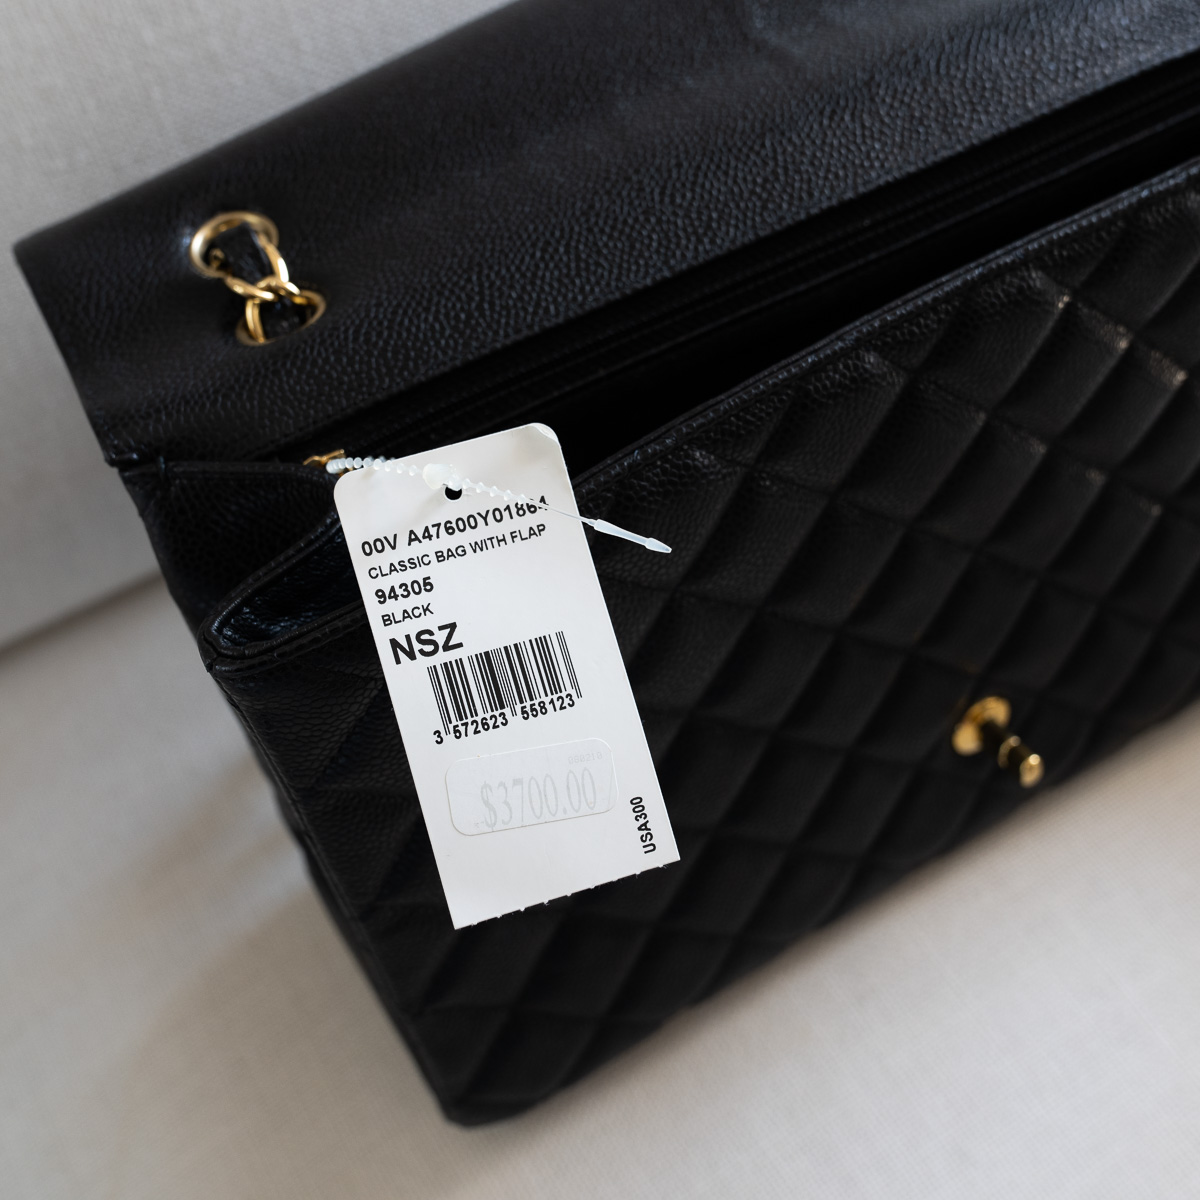 Multi-Pochette Bags: A New Classic or a Fleeting Trend? - PurseBlog